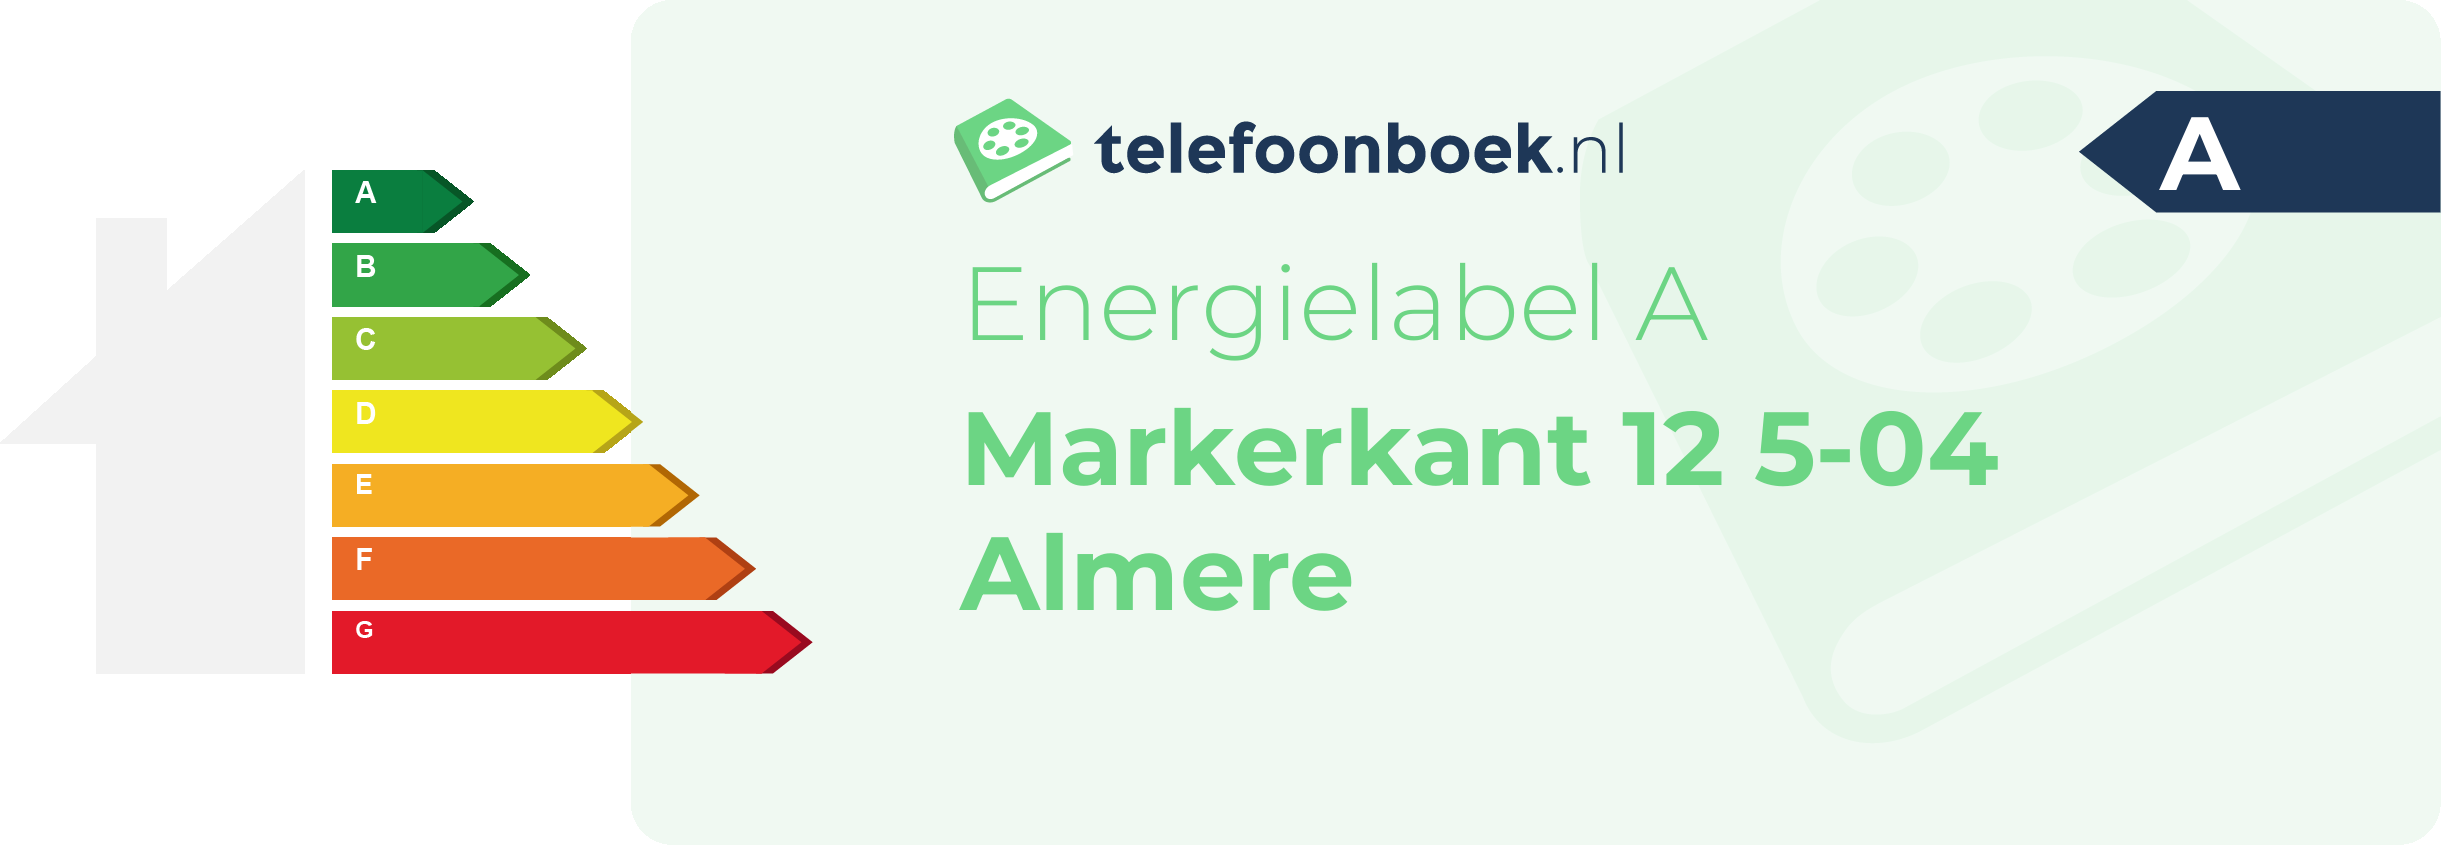 Energielabel Markerkant 12 5-04 Almere